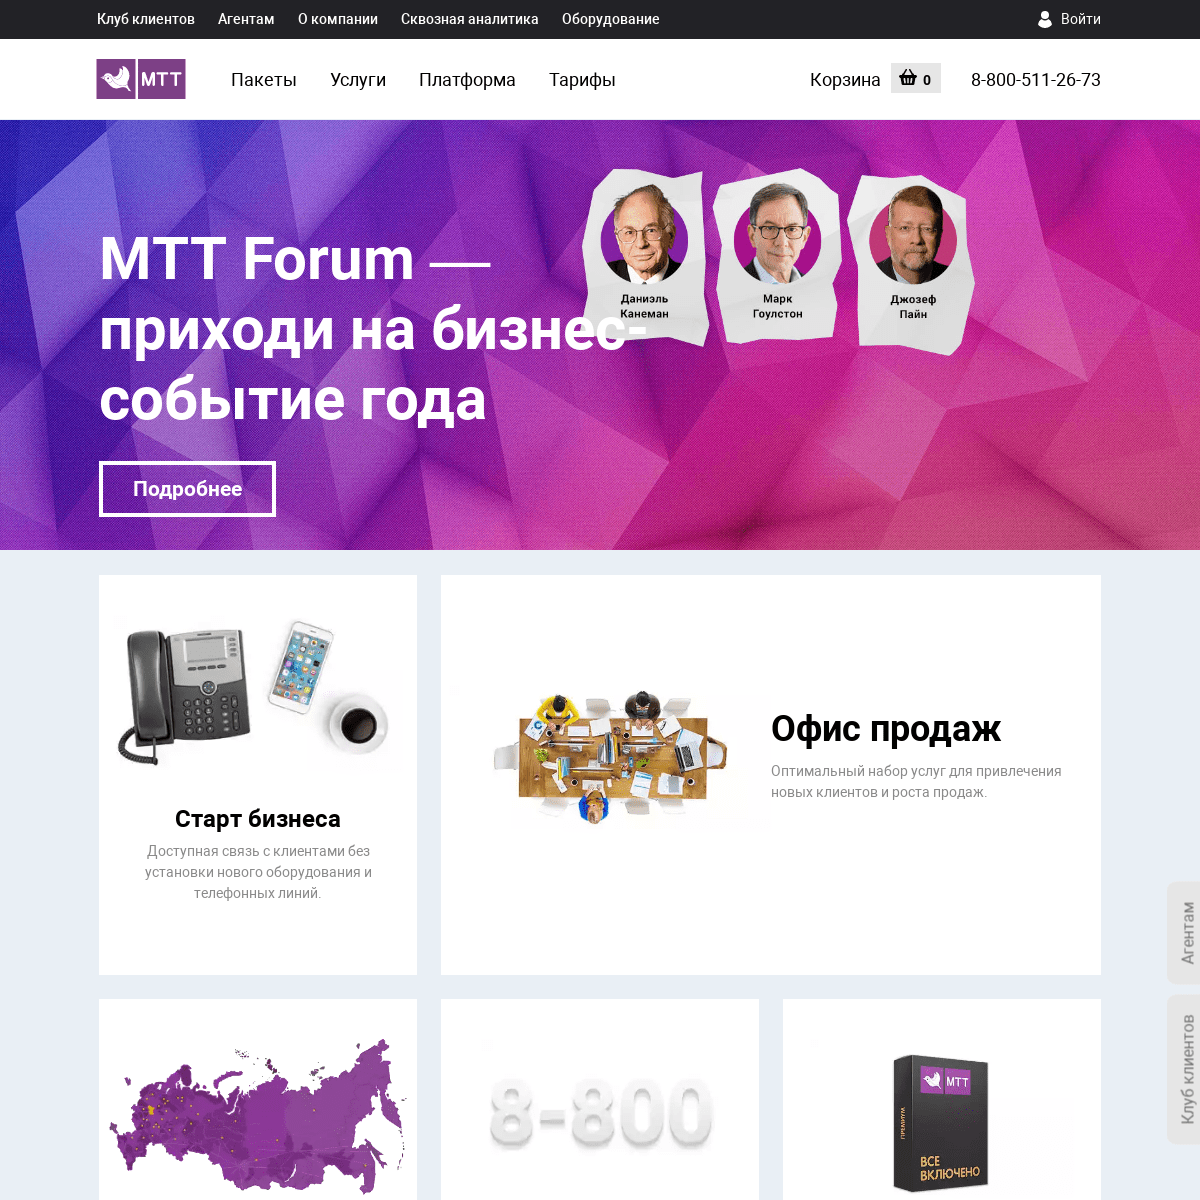 A complete backup of mtt.ru